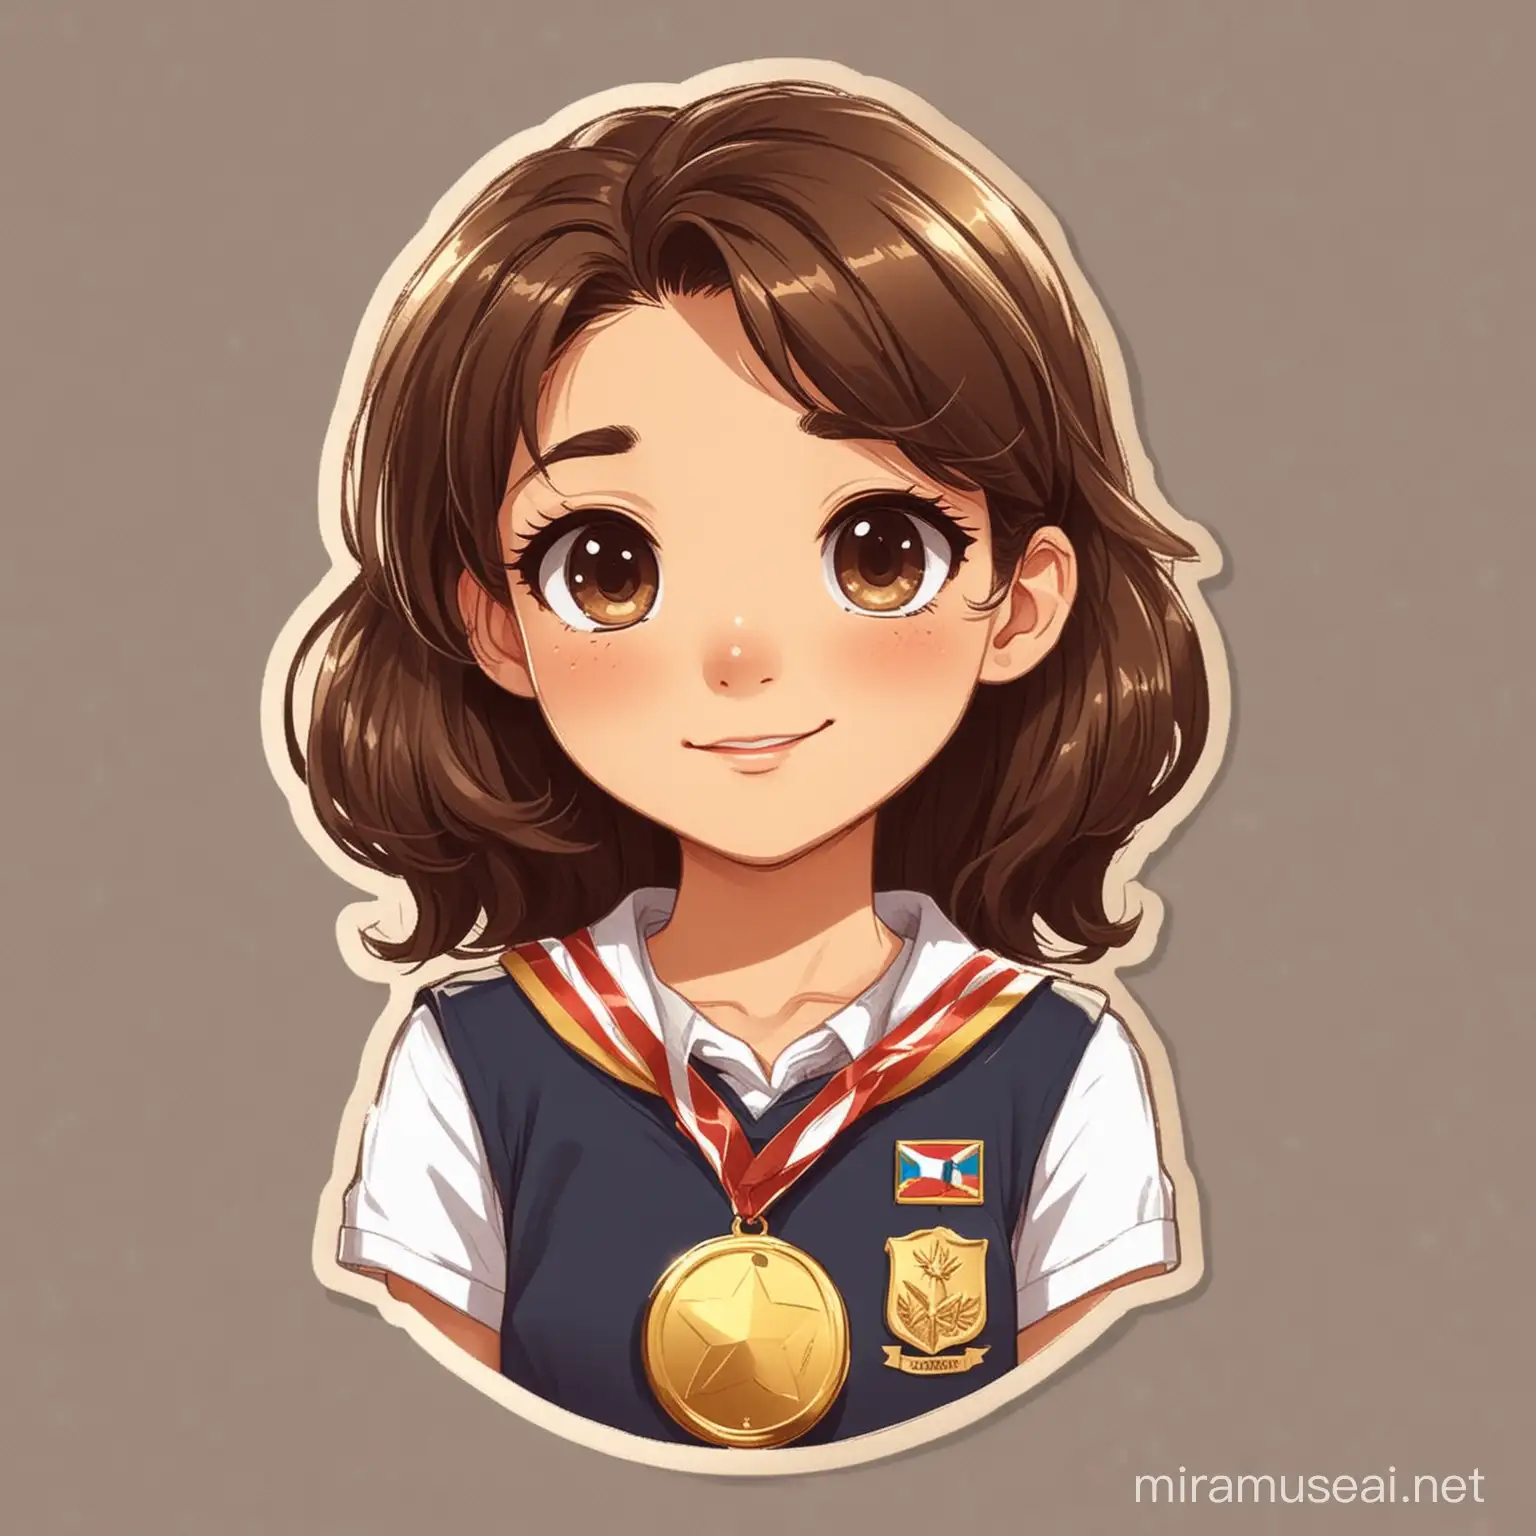 girl, wearing school uniform,wearing a big gold medal around her neck, cartoon sticker style, high level detail, dark brown colored hair